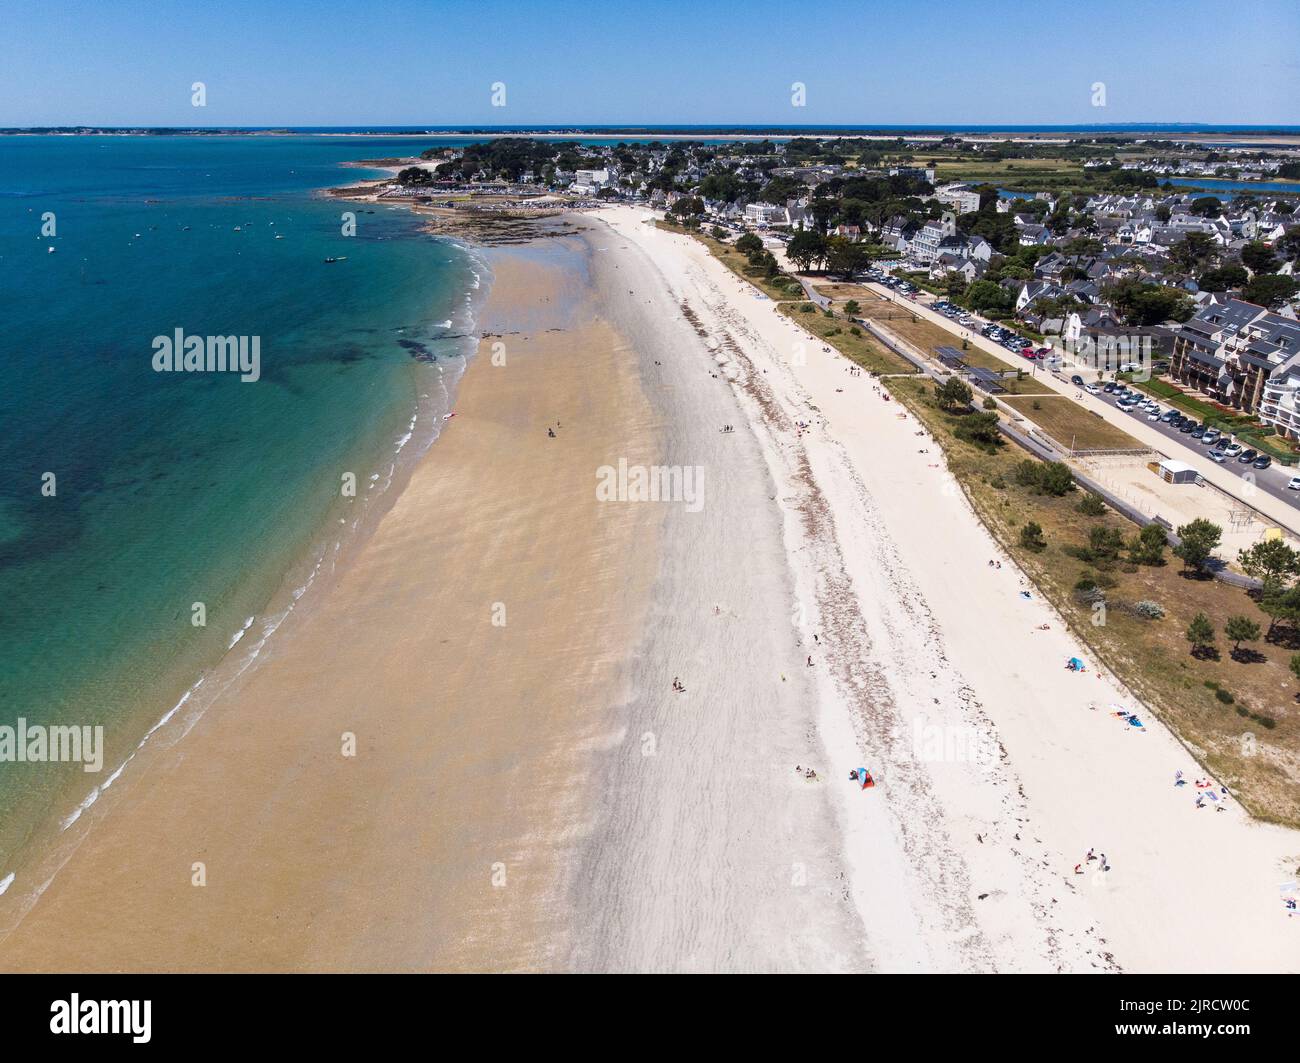 Aerial view of Grande plage de Carnac, Golfe de Gascogne, France Carnac Beach Stock Photo